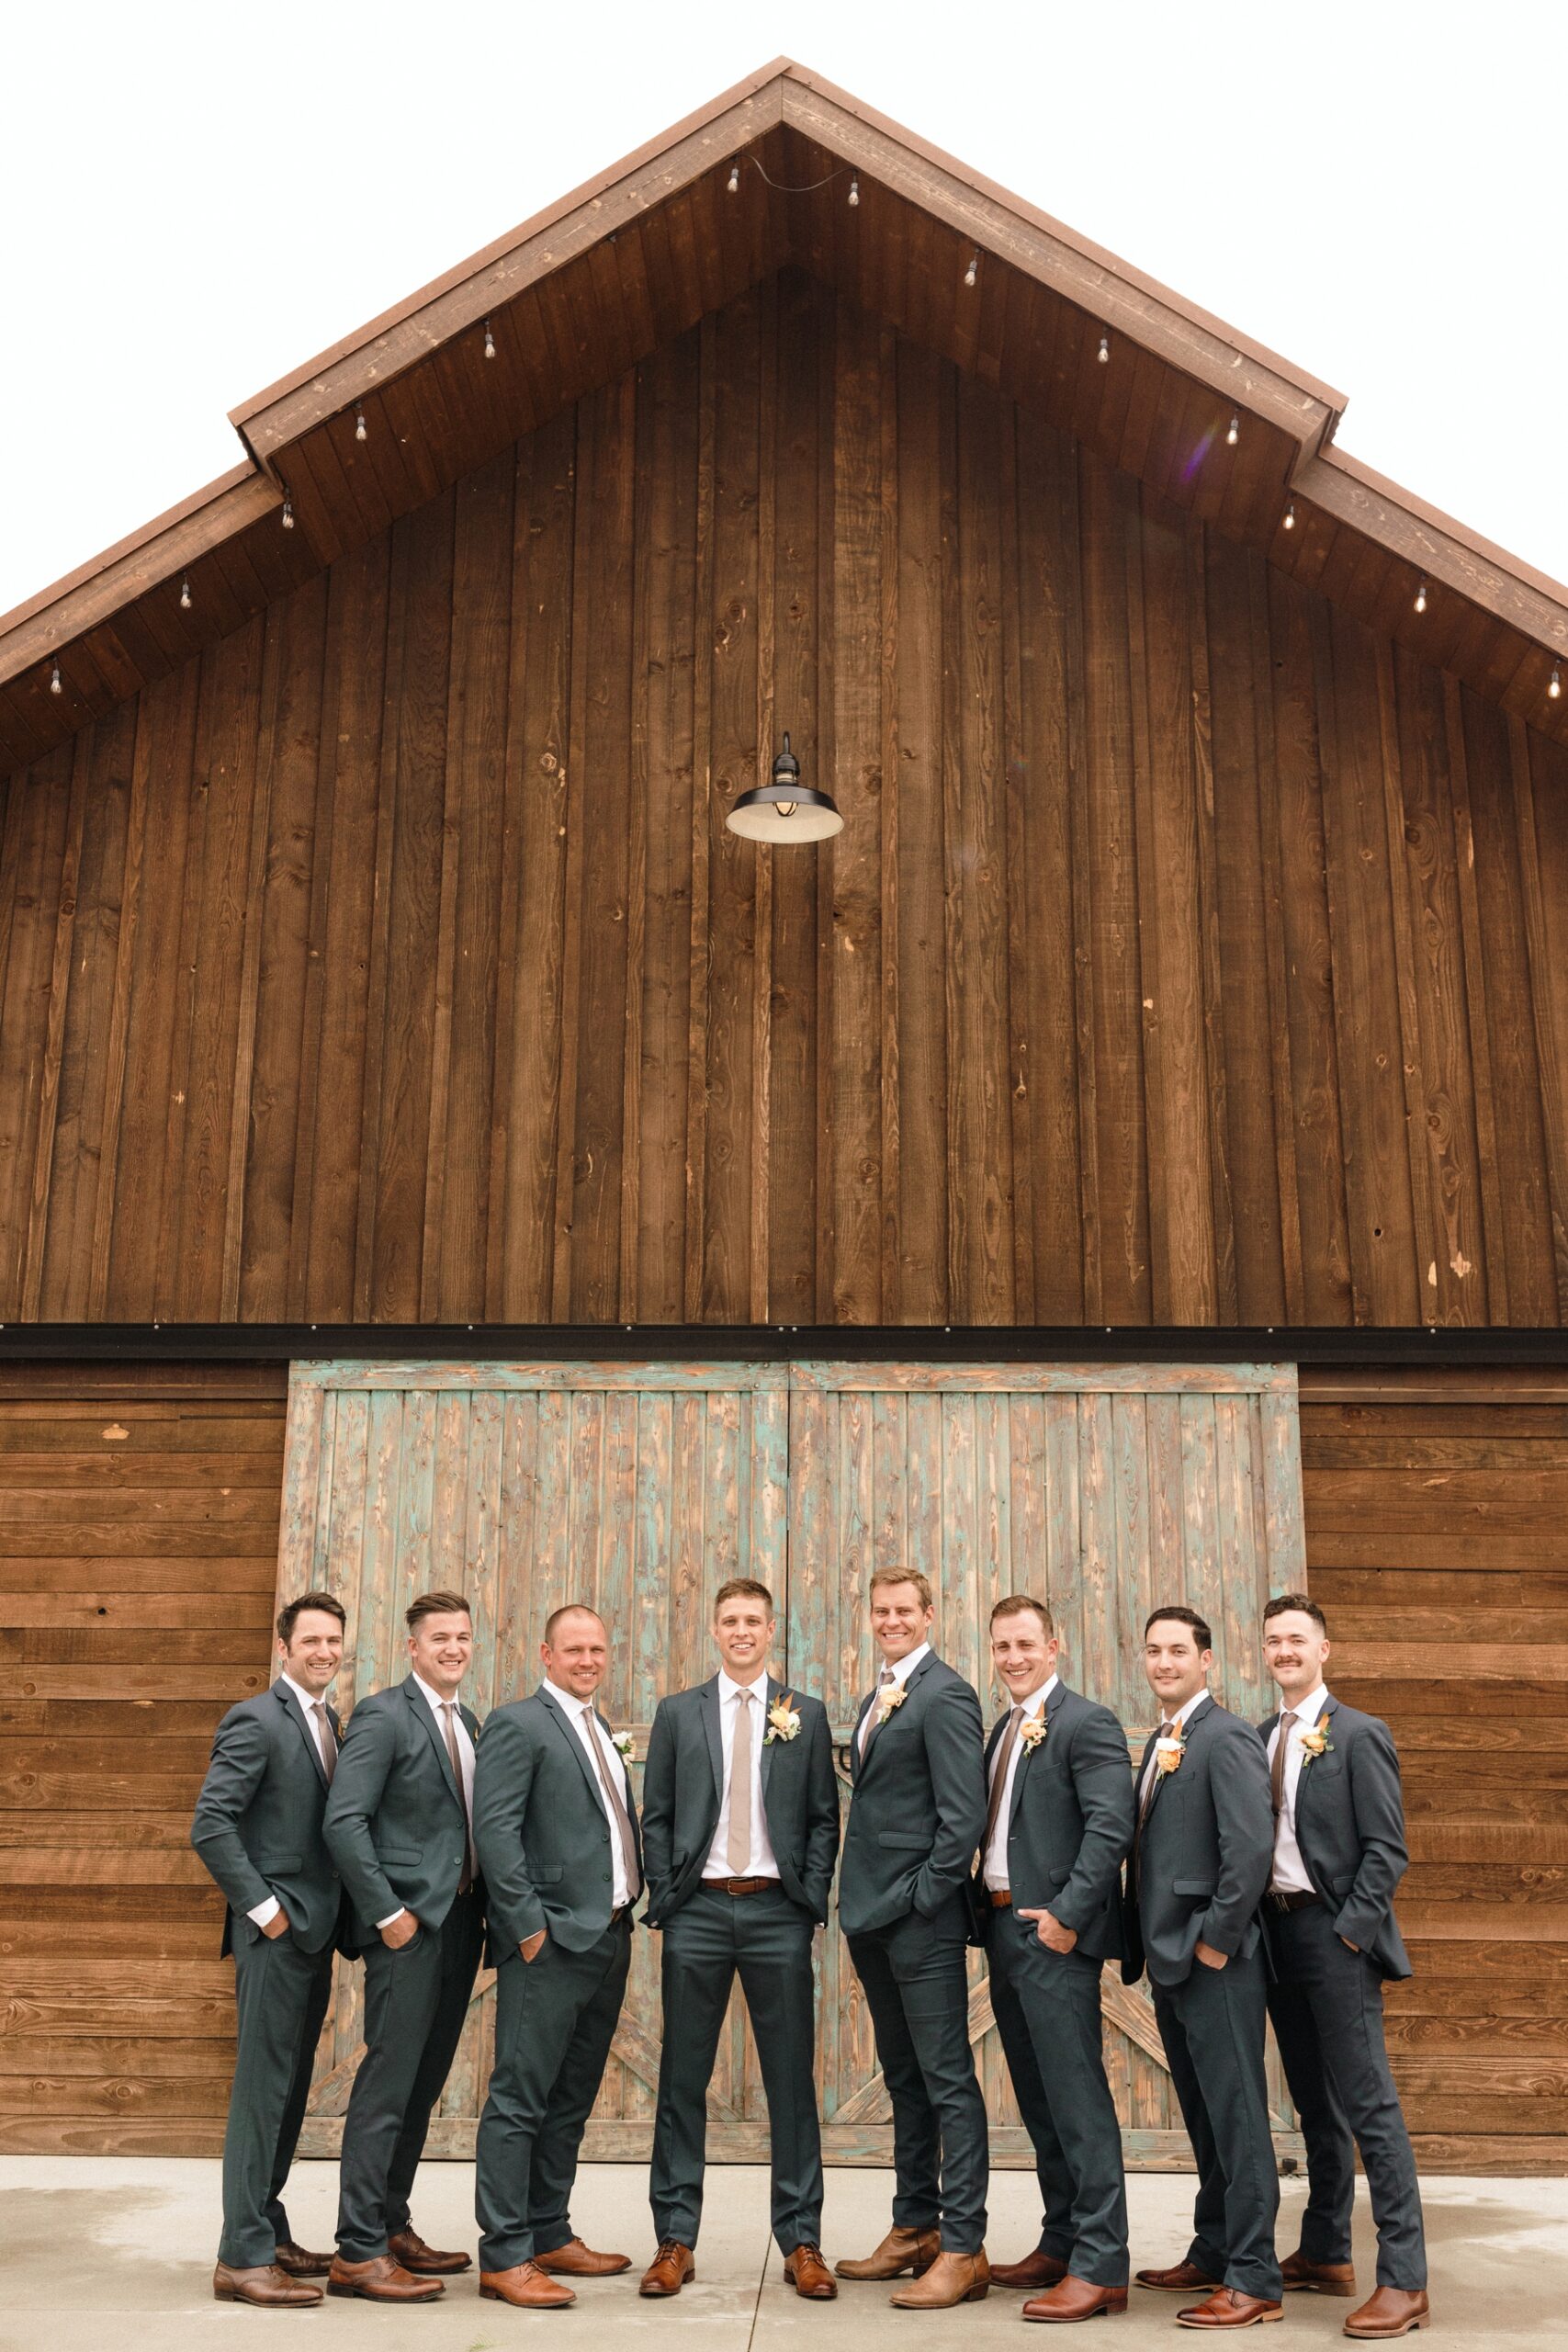 Groom with groomsmen in gray suits